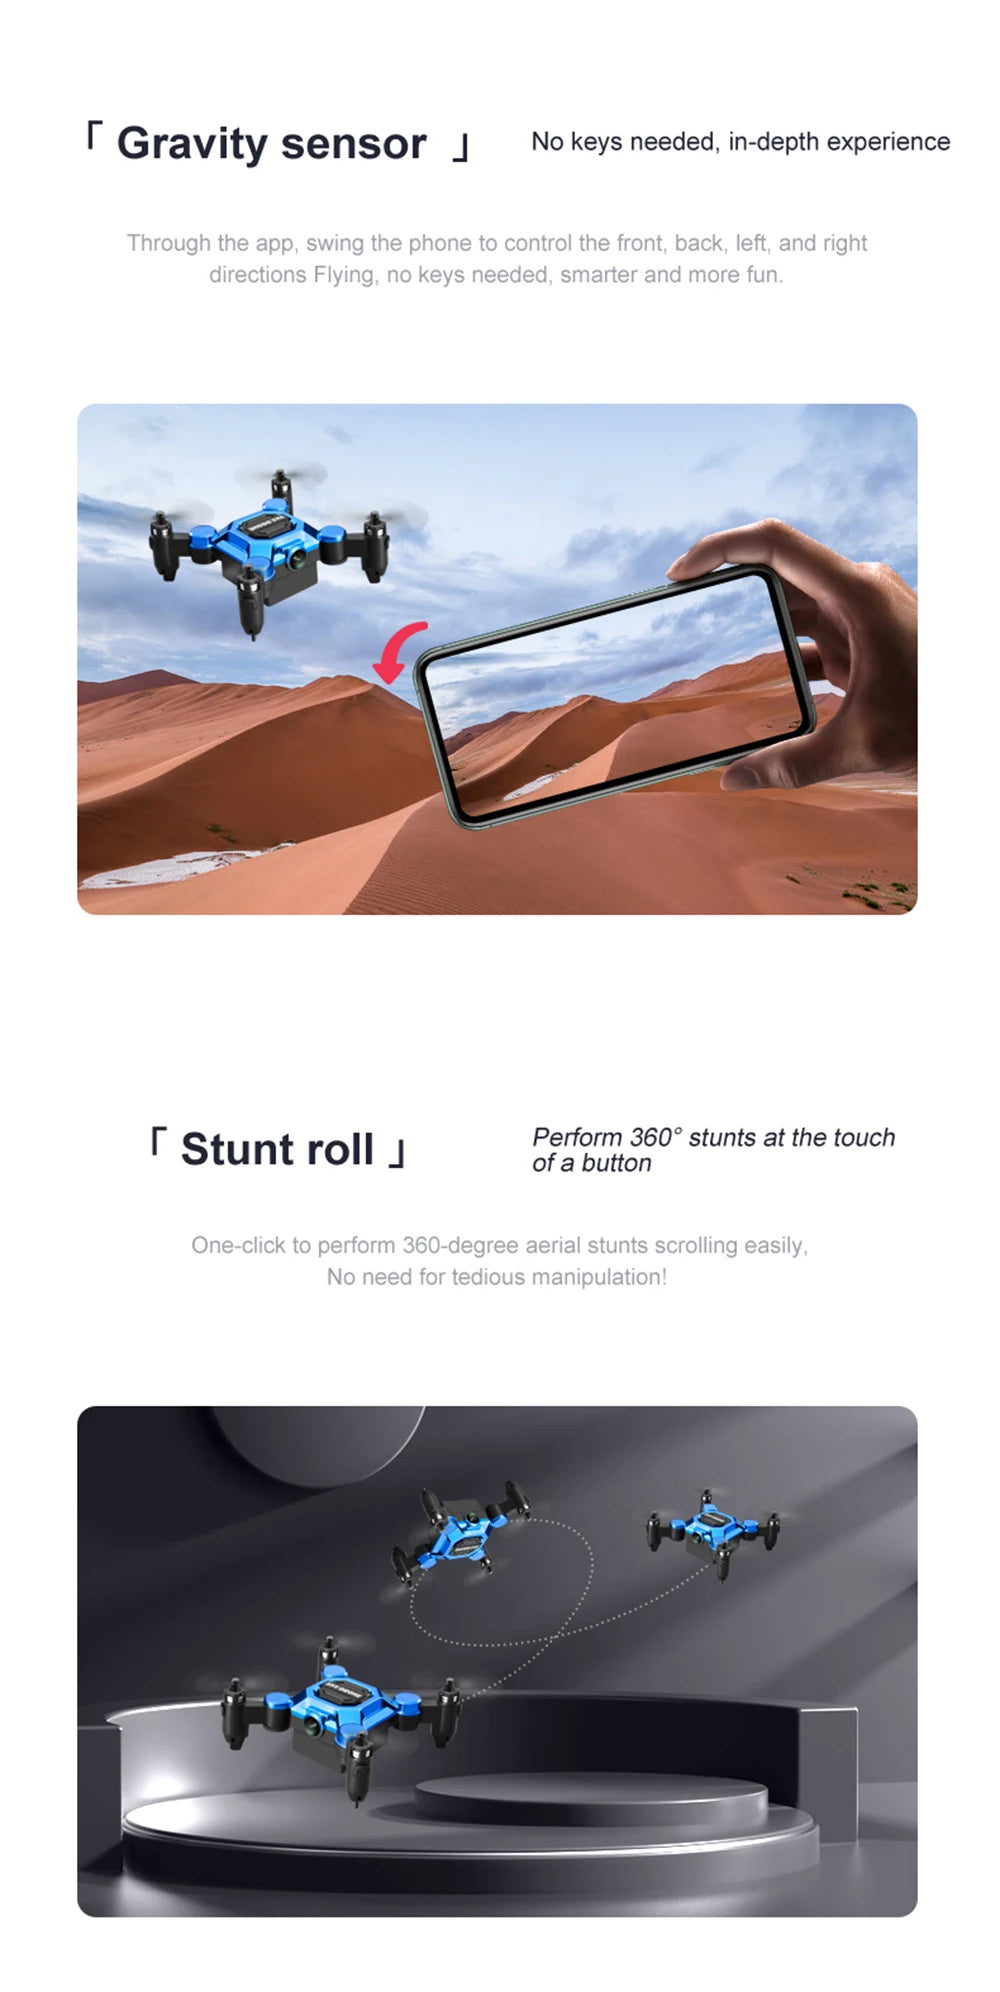 stunt roll perform 360-degree aerial stunts scrolling easily .